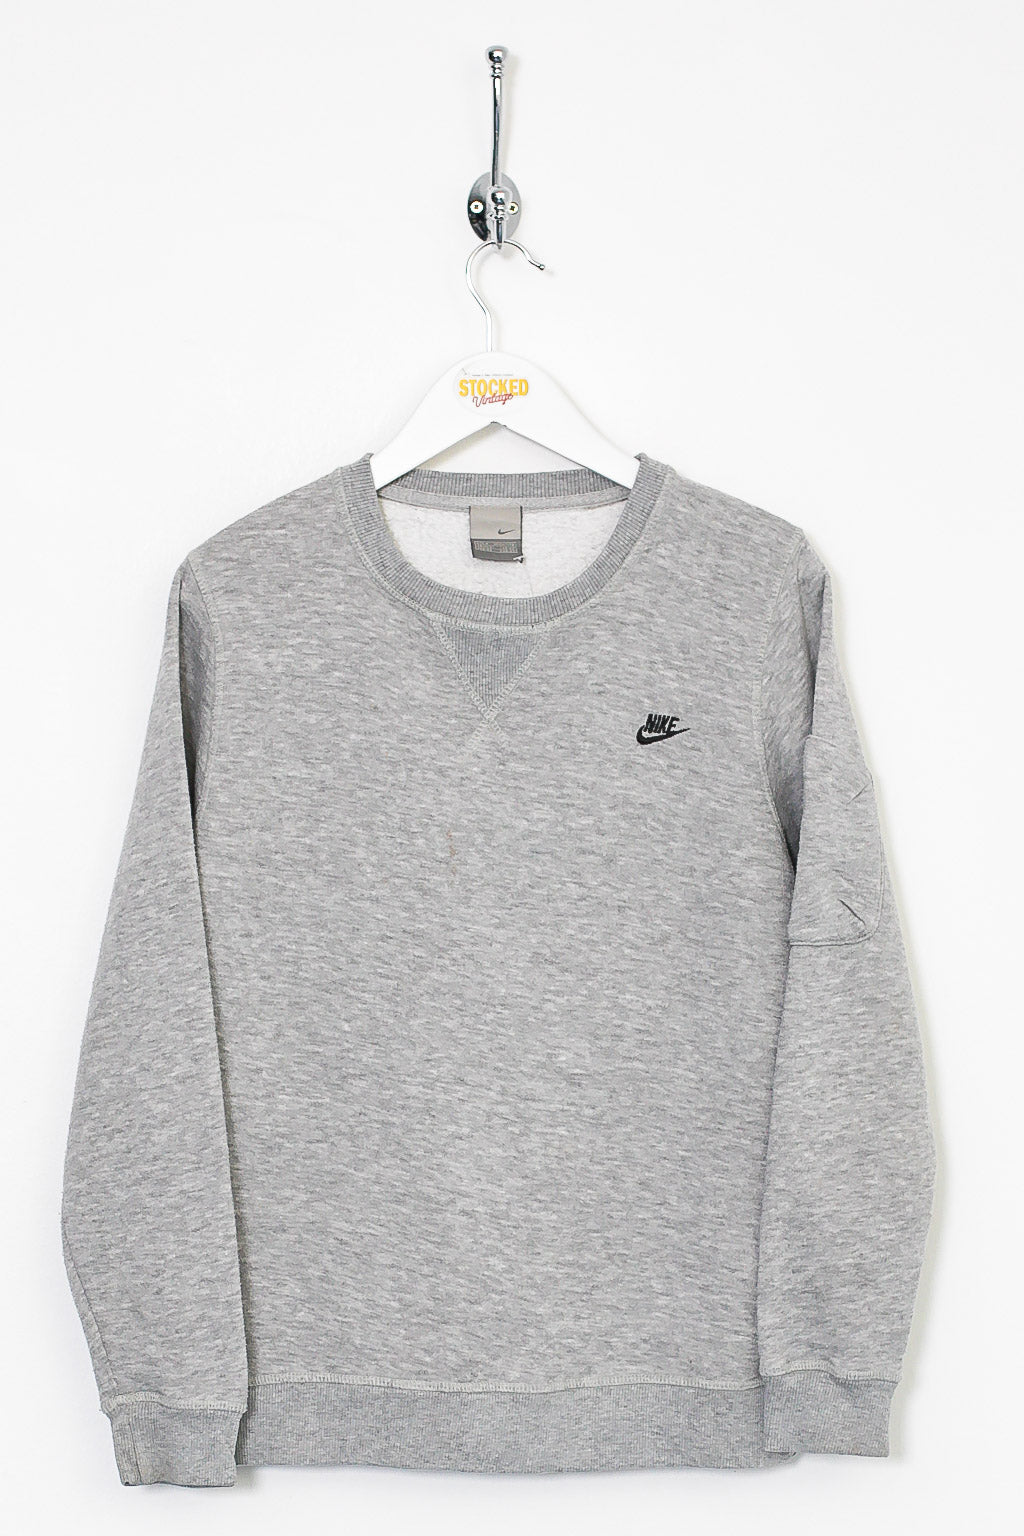 Womens Nike Sweatshirt (XS)